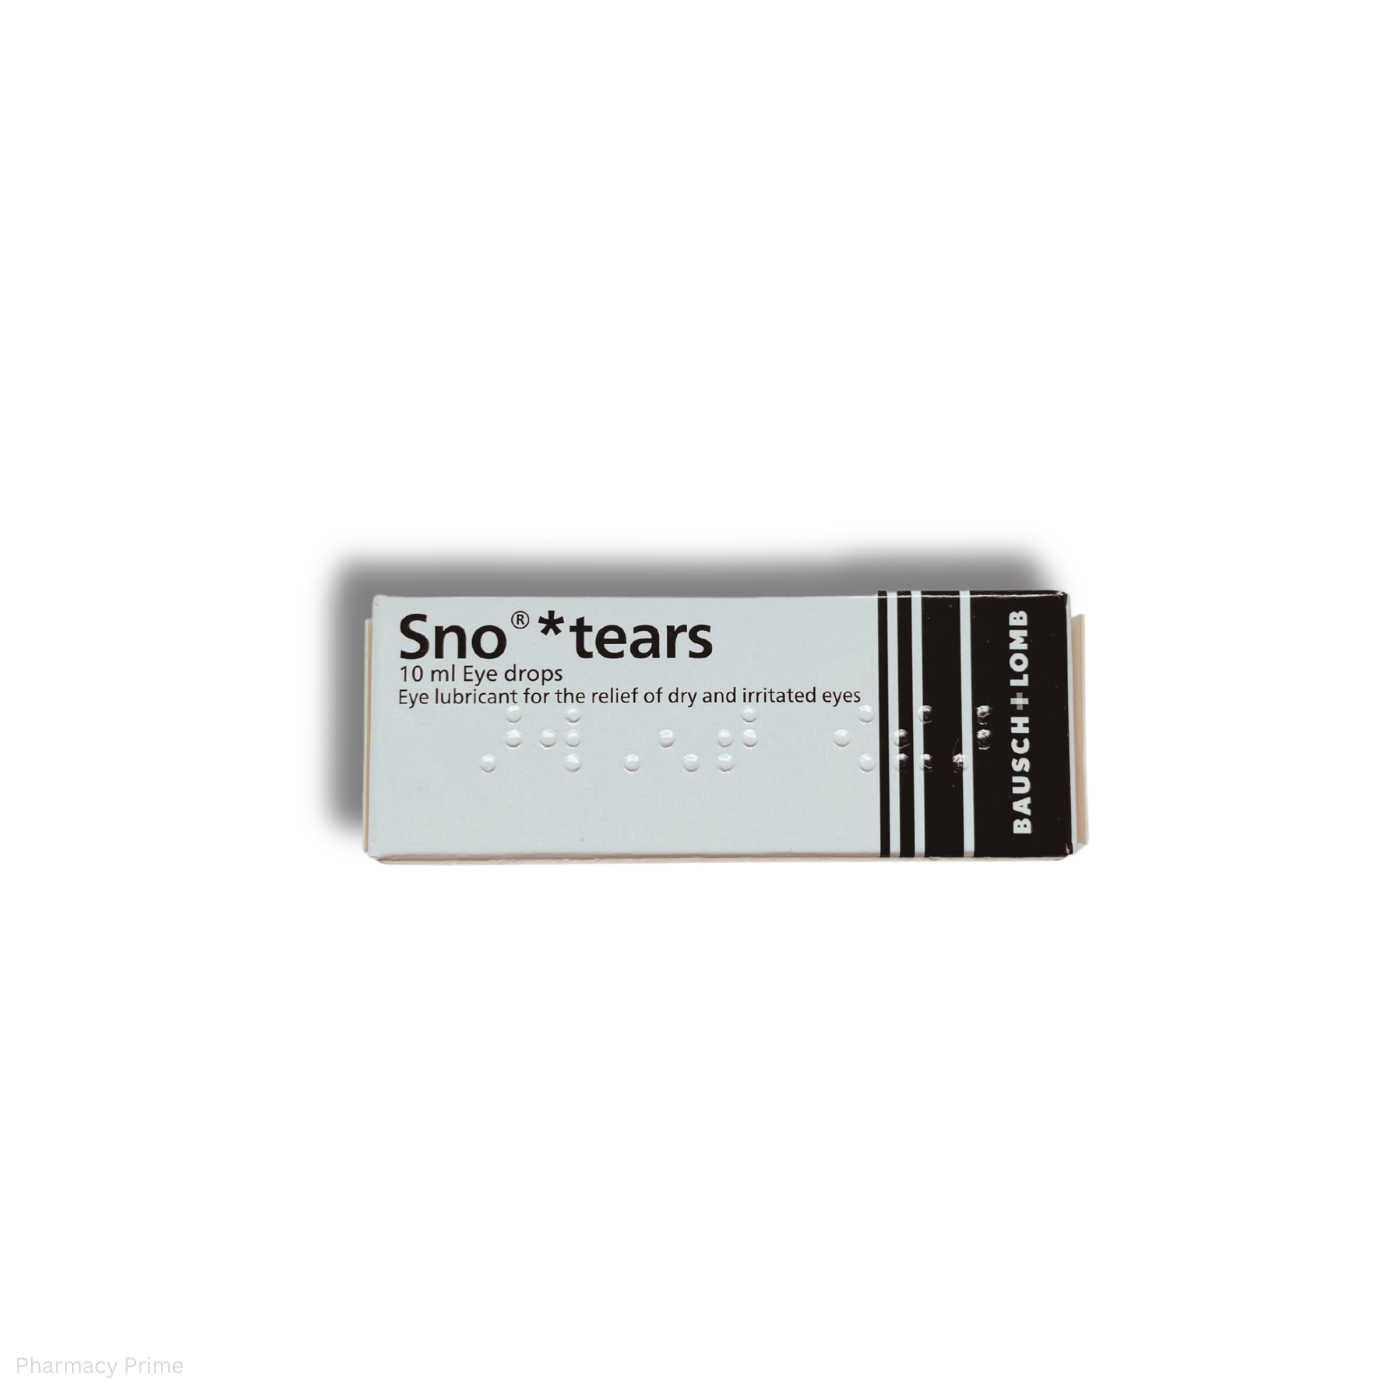 Sno*tears Eye Drops -10ml